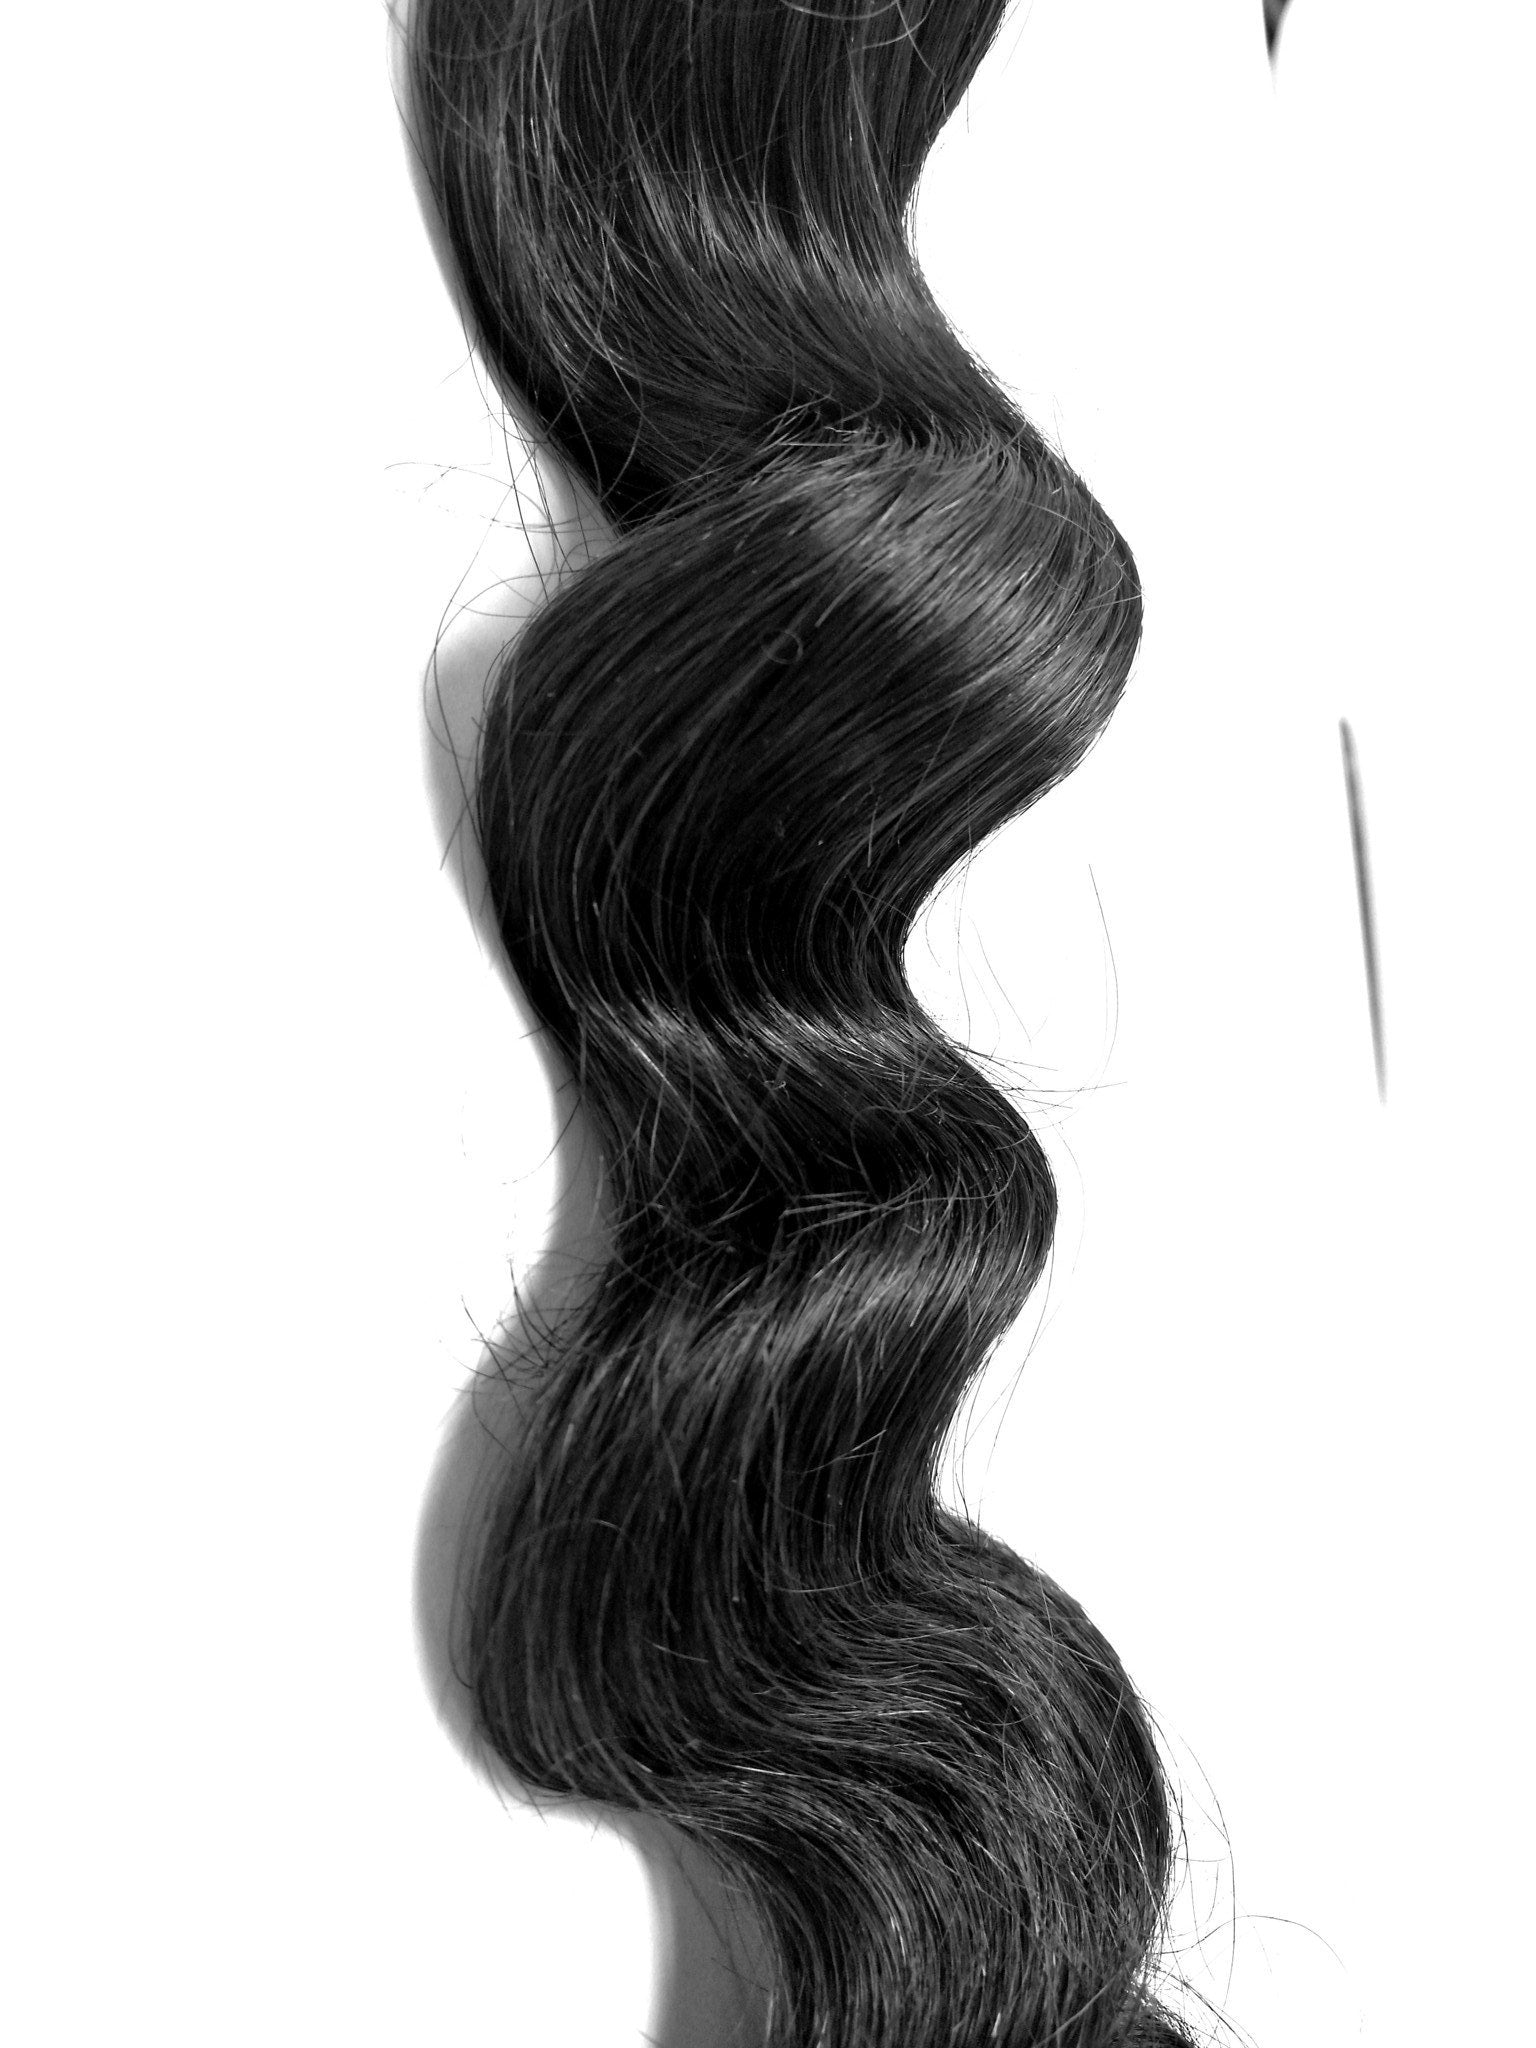 Malaysian Hair Bundles - Euryale Virgin Hair